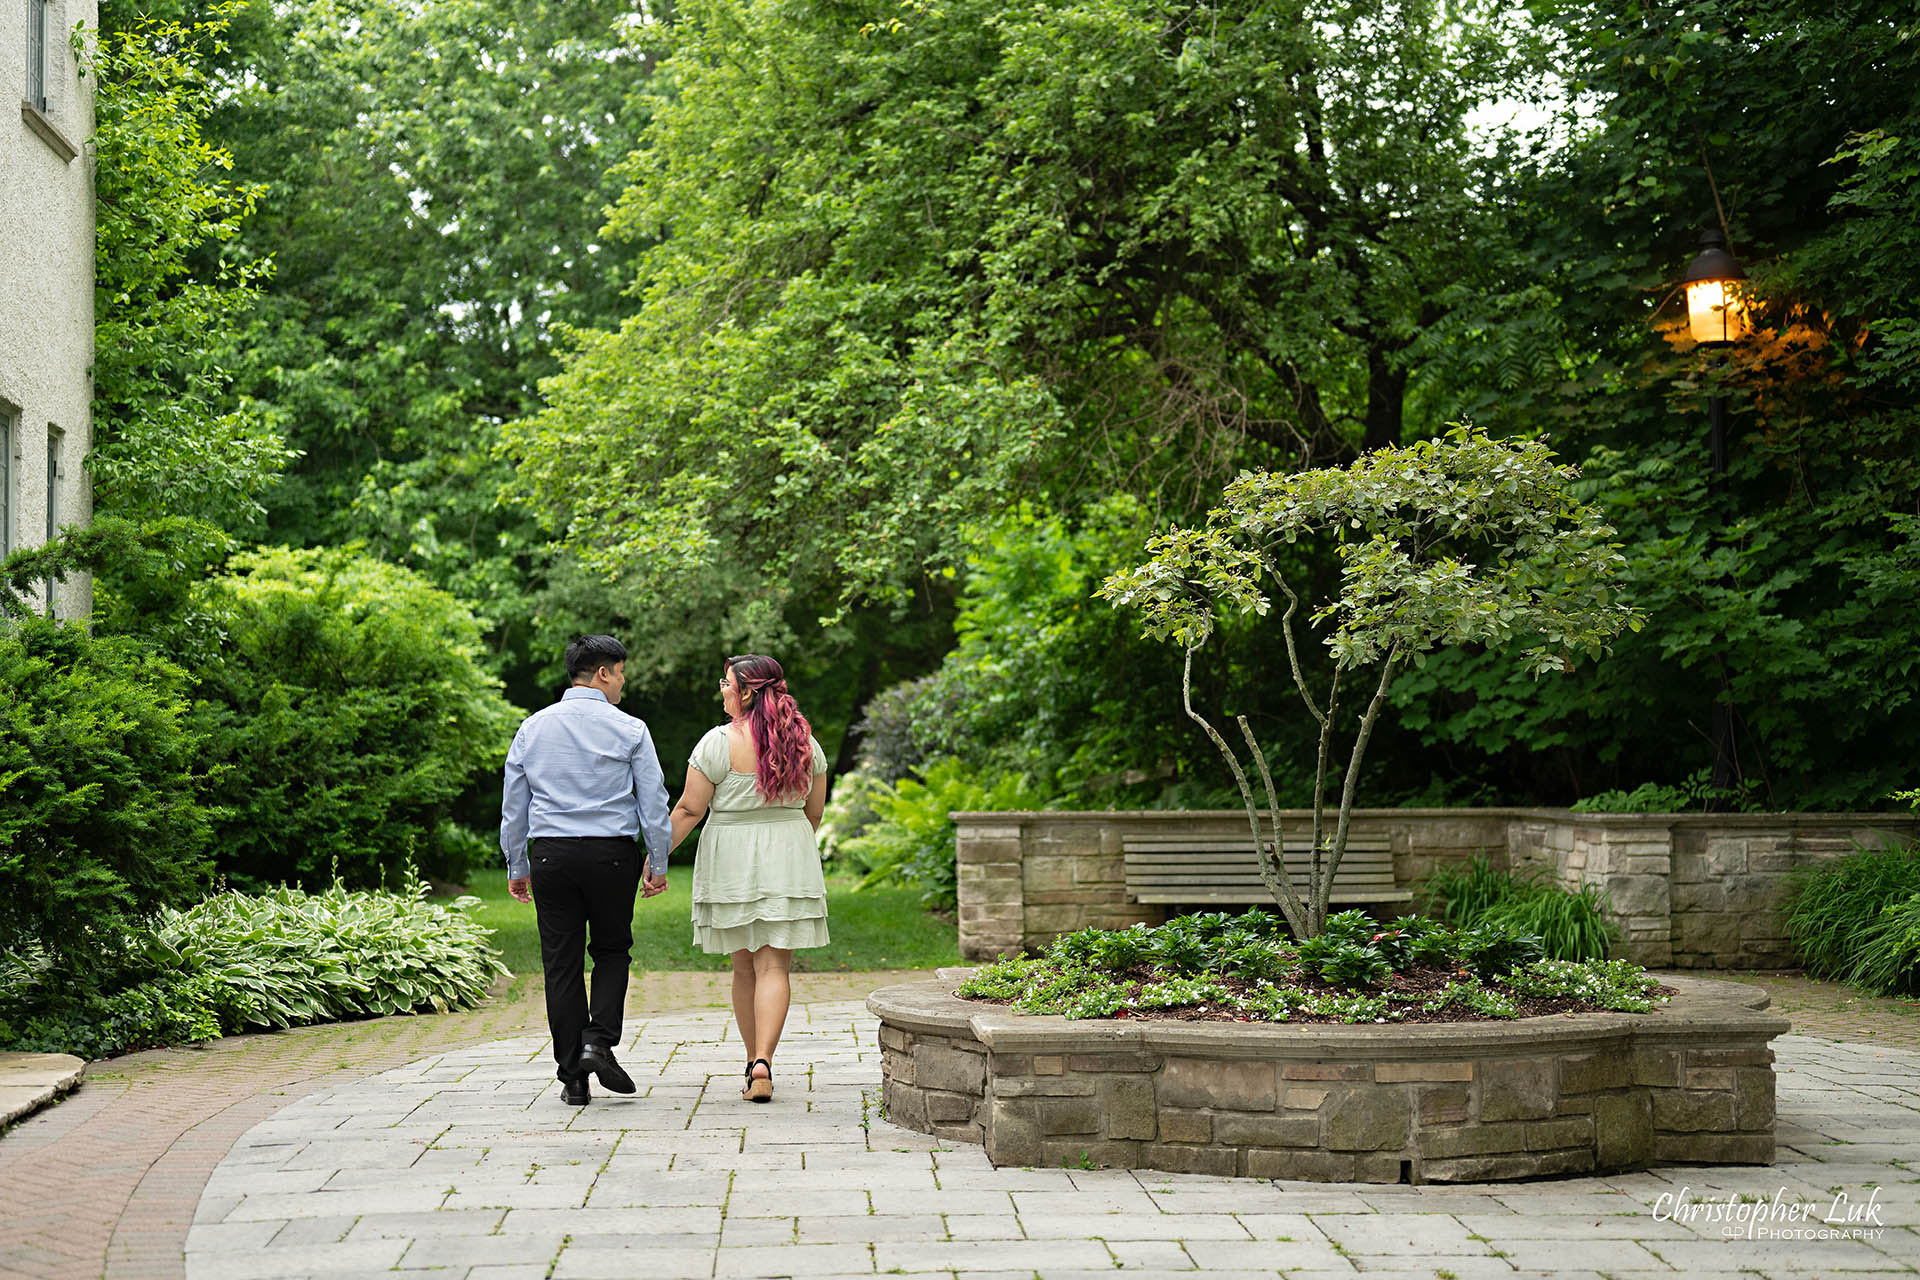 Adamson Estate Landscaped Garden Terrace Bride Groom Walking Together Holding Hands Candid Organic Natural Photojournalistic